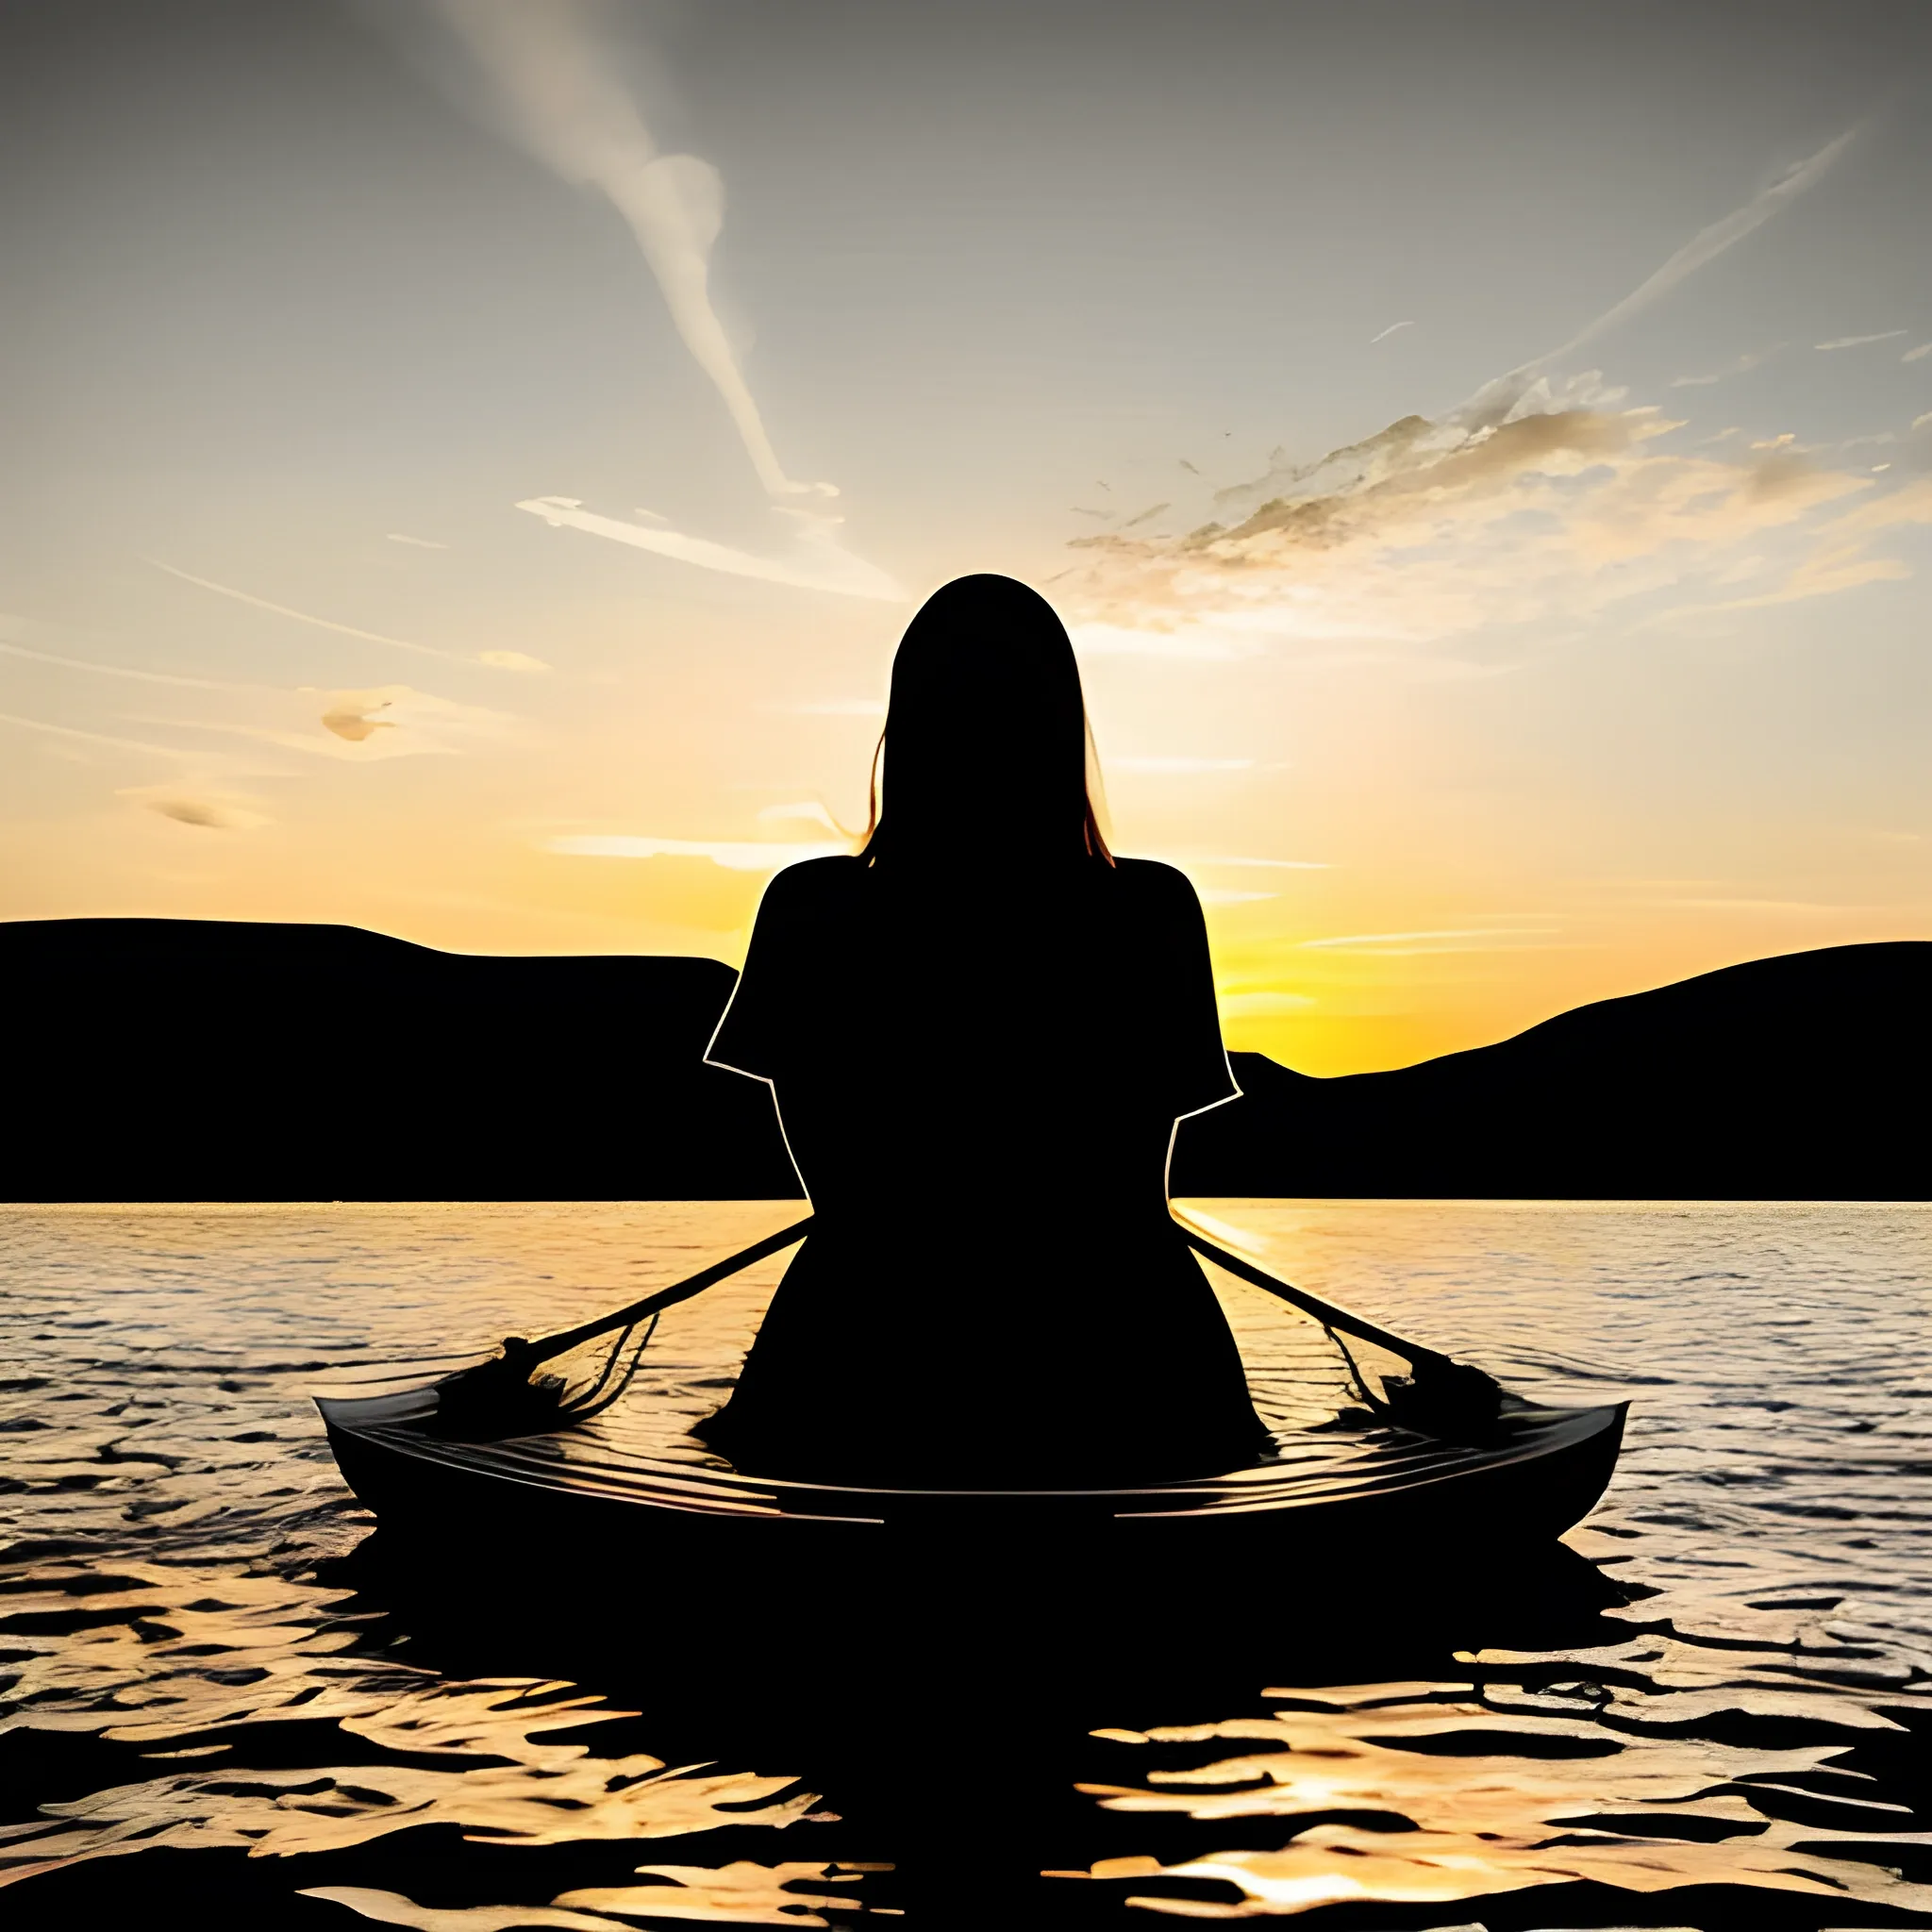 A girl sitting on lake, watching sunsets, black and white woodcut